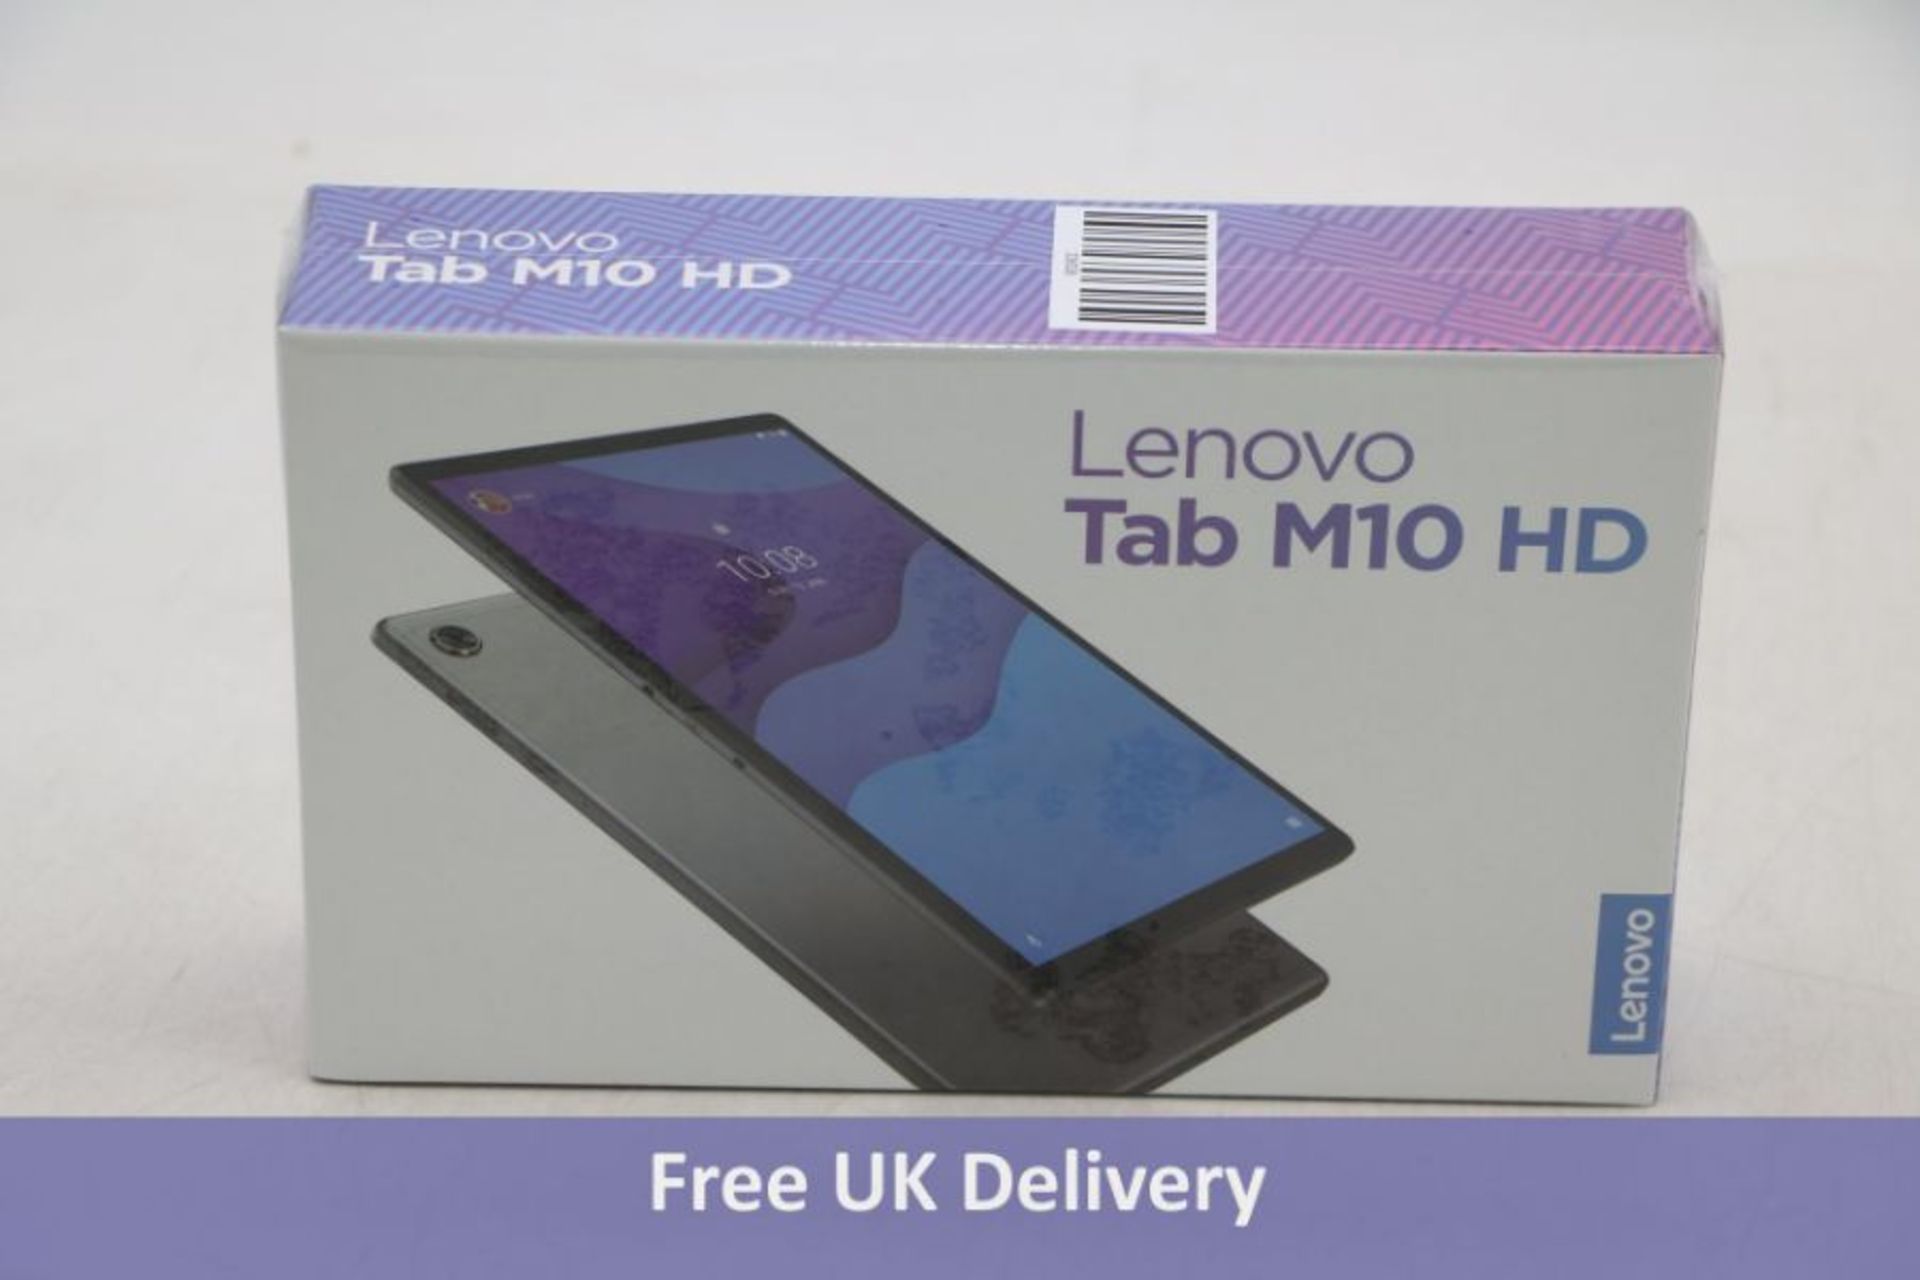 Lenovo Tablet M10 HD, 10.1", 2GB+32GB, Iron Grey, TB-X306F. Brand new, box sealed